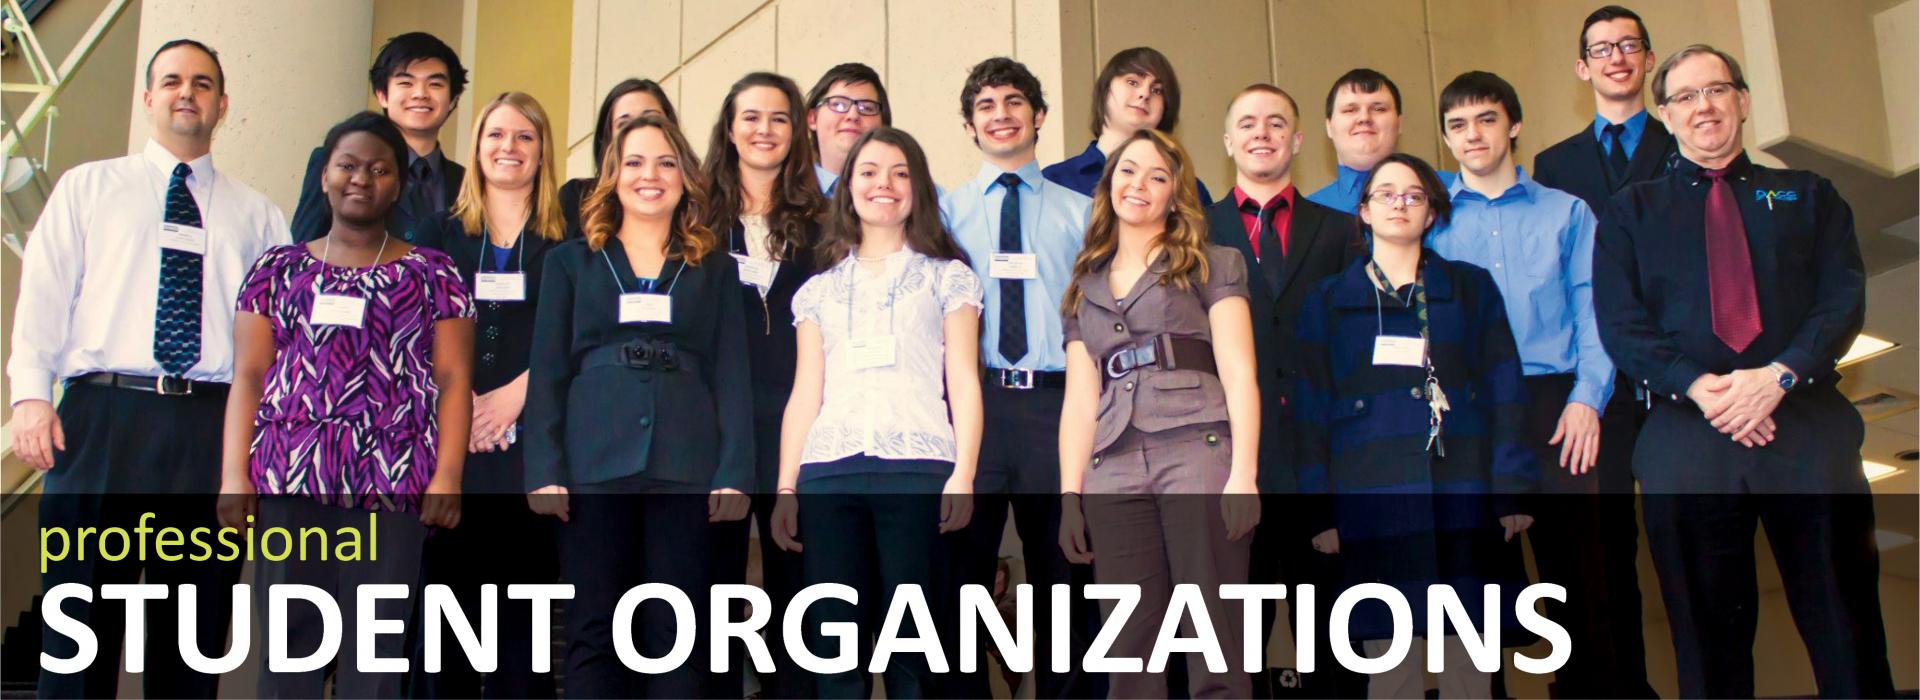 Professional Student Organizations Banner